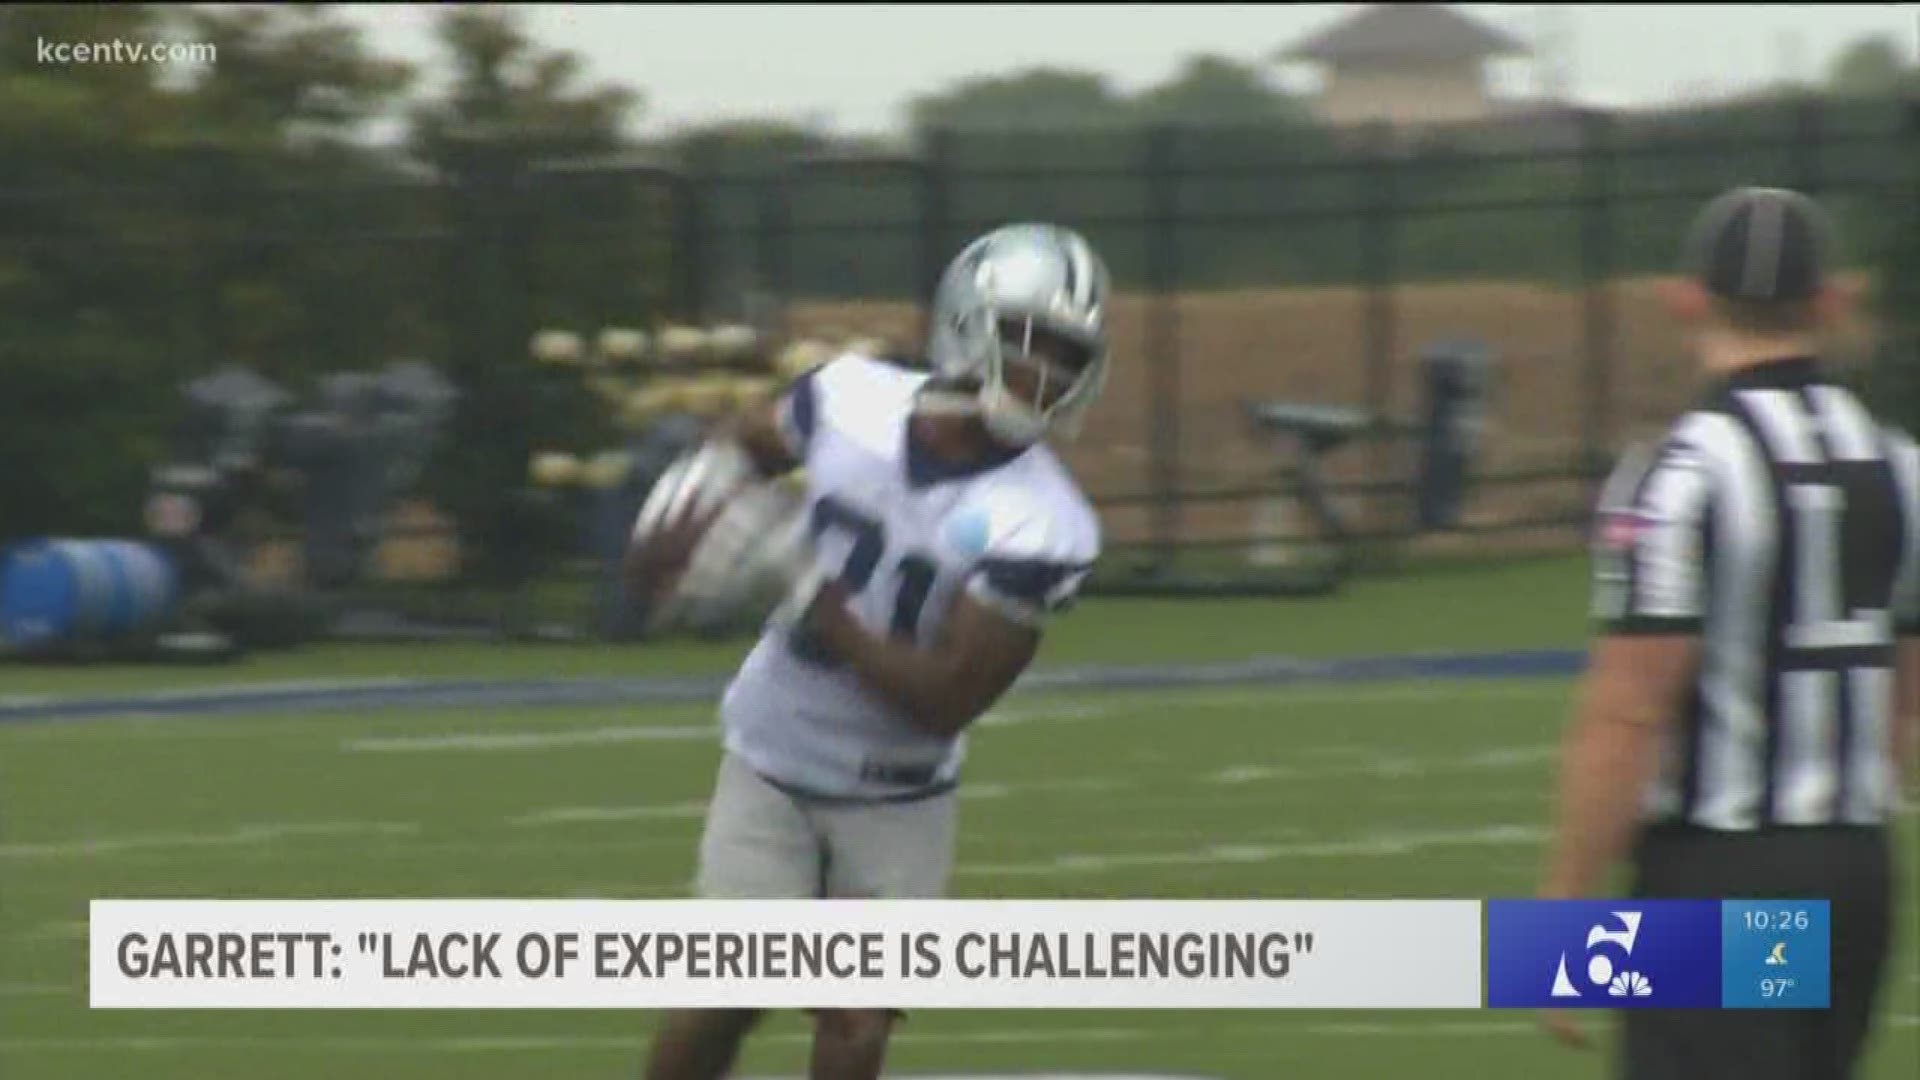 Jason Garrett spoke about the challenges the Cowboys face this season. 